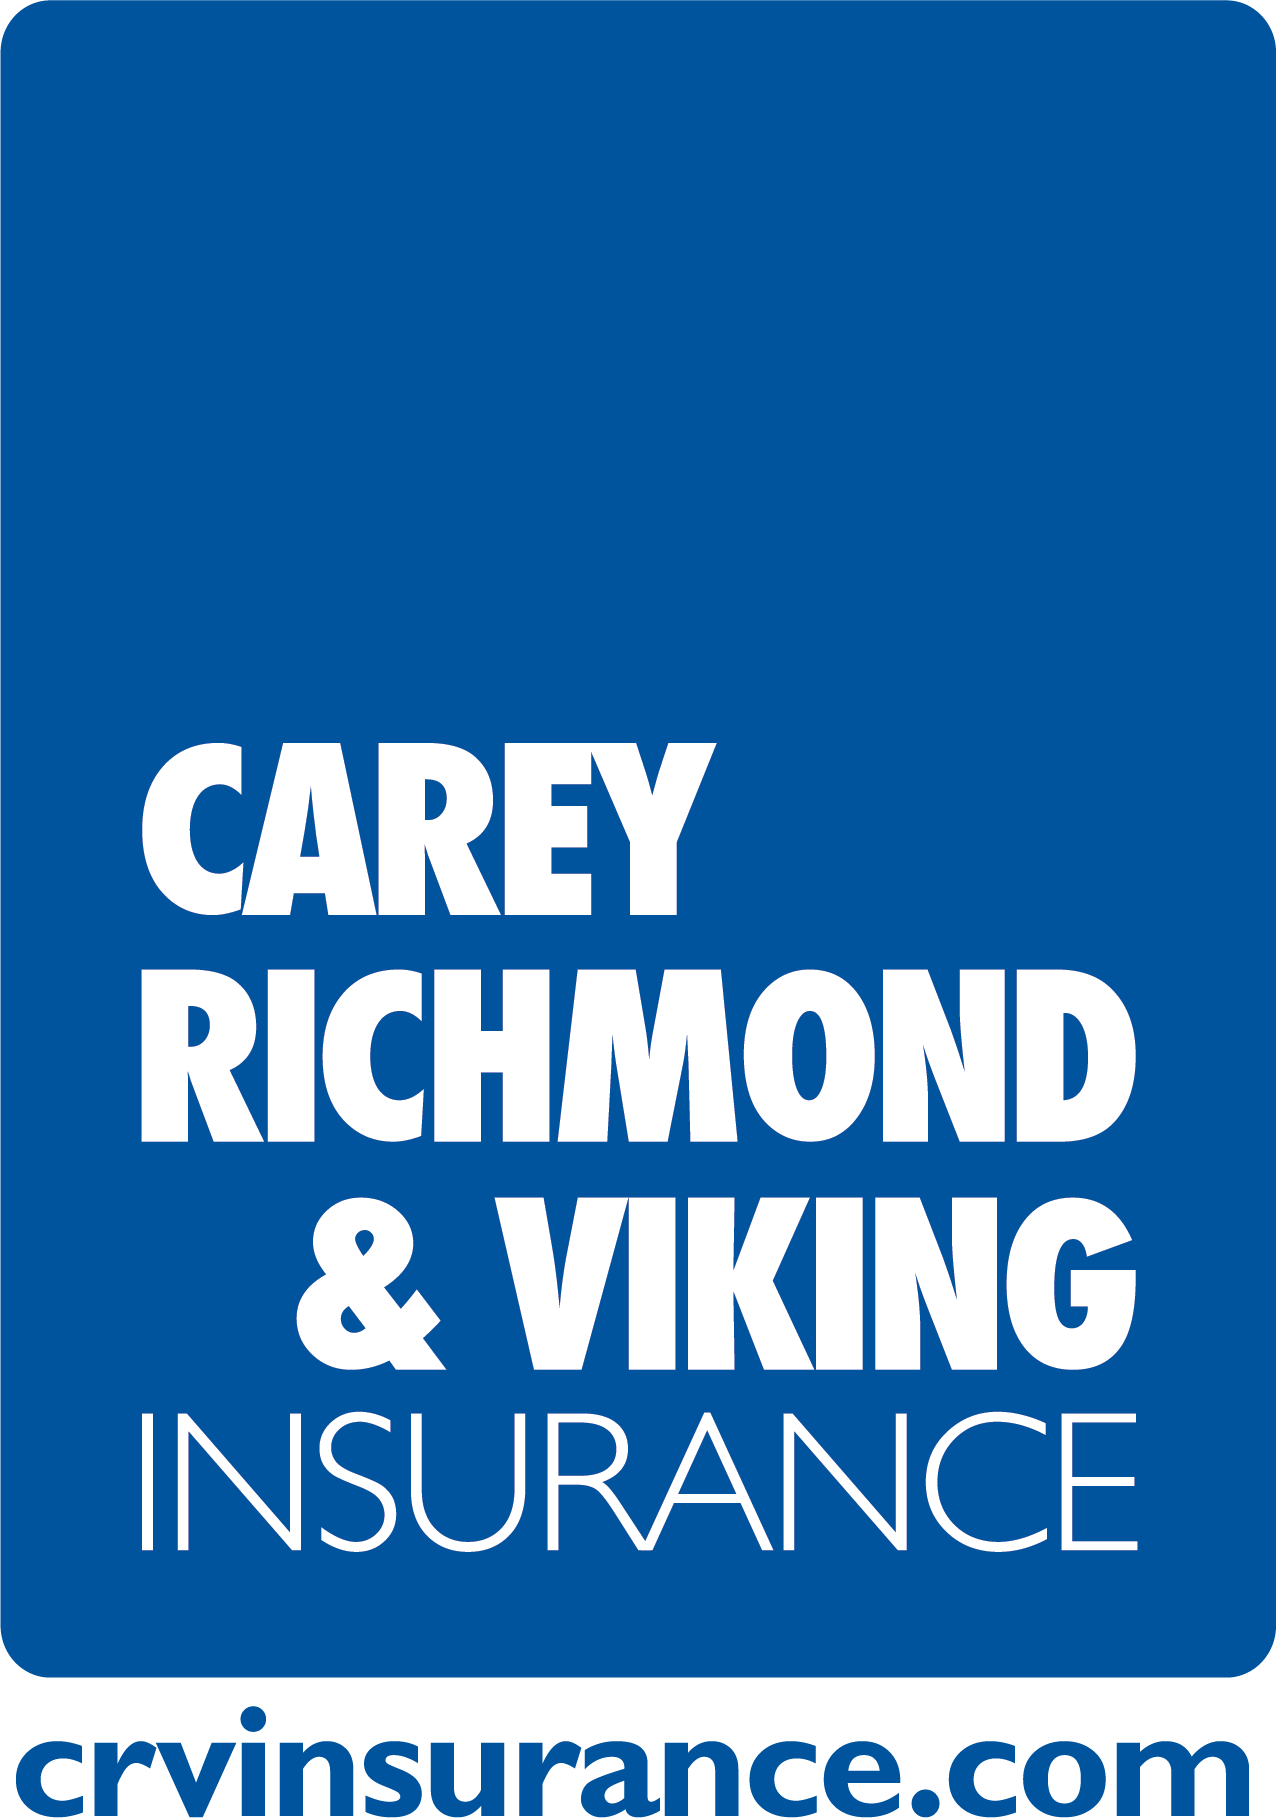 Carey, Richmond & Viking Insurance — East Providence Icon